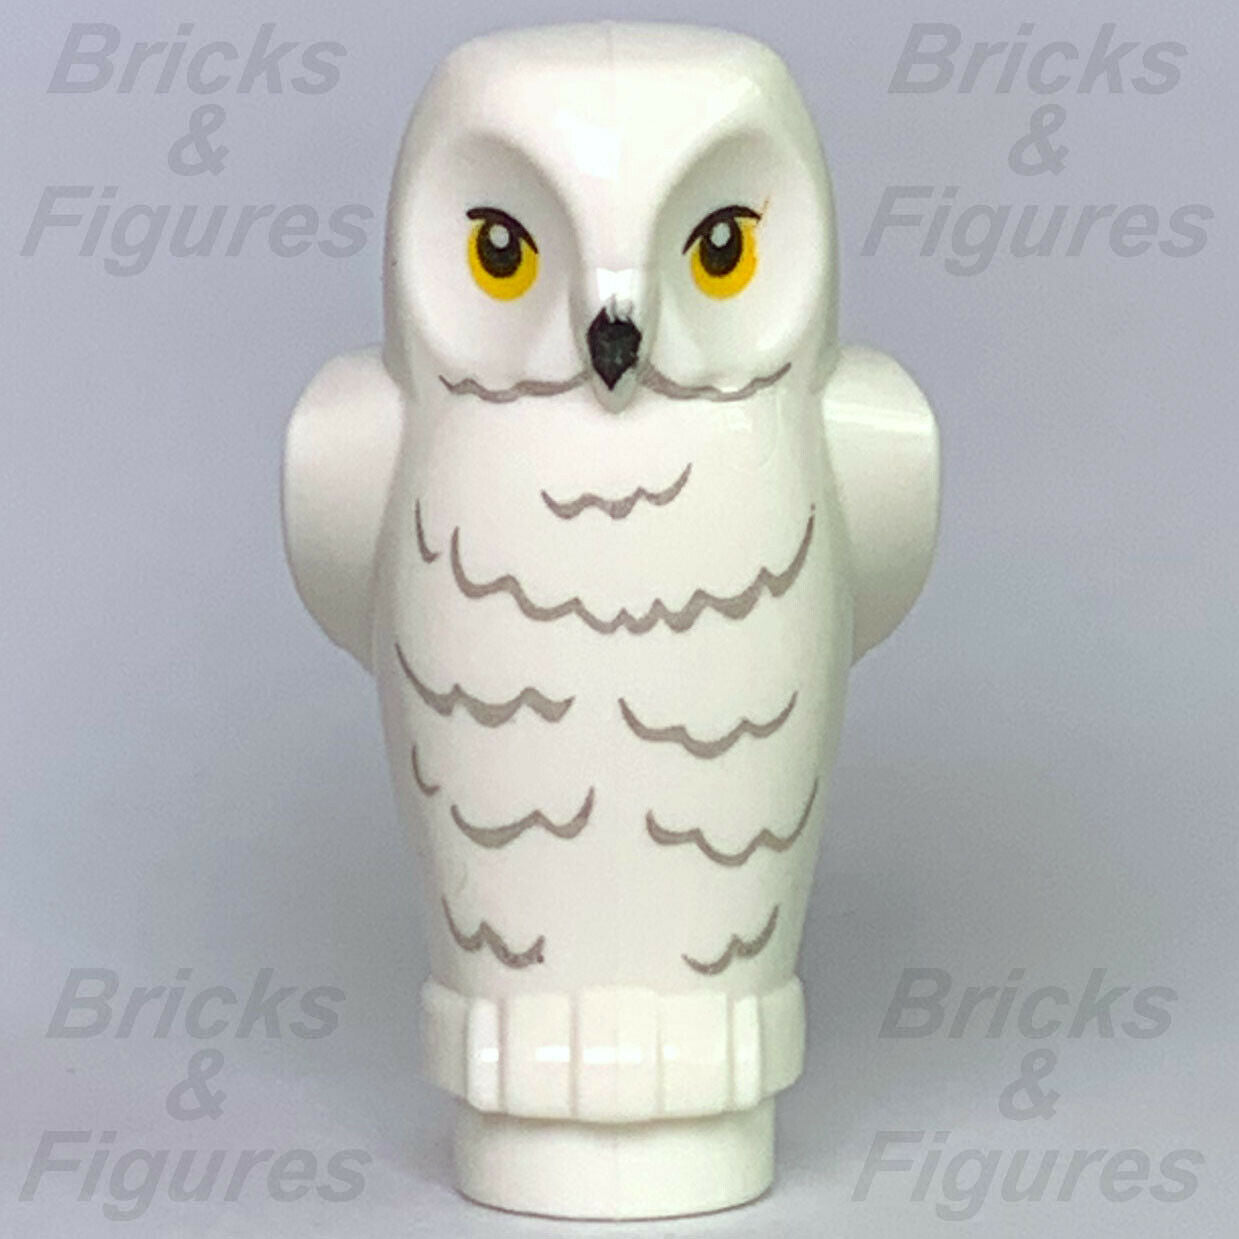 New Harry Potter LEGO Hedwig White Owl Bird Animal Part 4842 4841 75954 75953 - Bricks & Figures